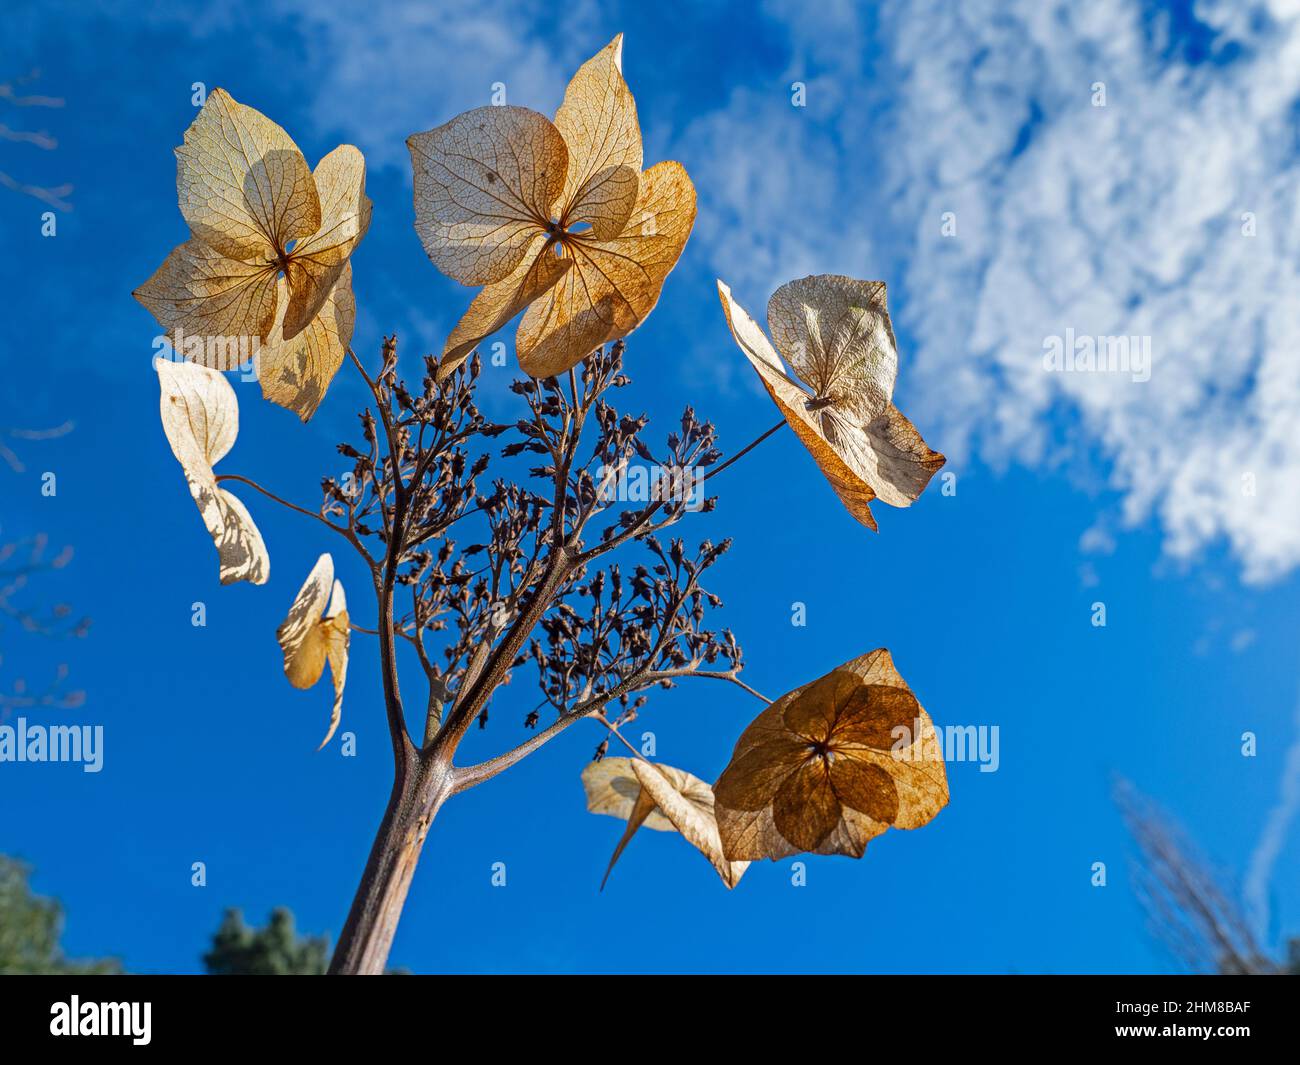 Dead Hydrangea Flower Skeletons February against a blue sky Stock Photo